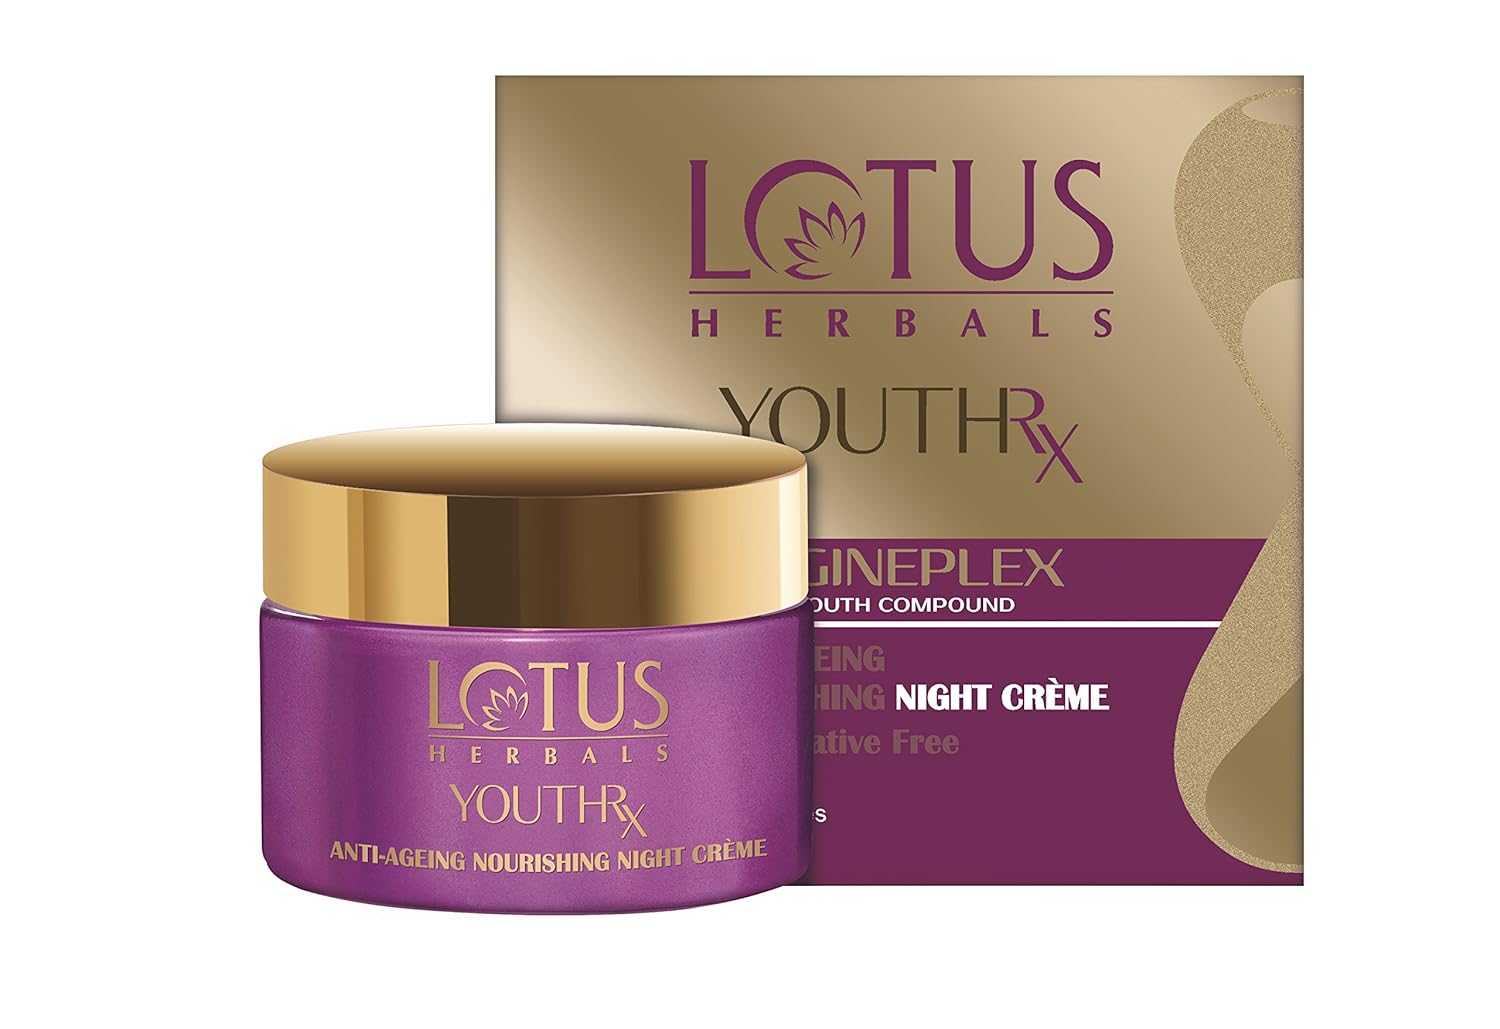 Lotus Herbals Youth Gineplex Compound Anti-Ageing Nourishing Night Cream 50 gm